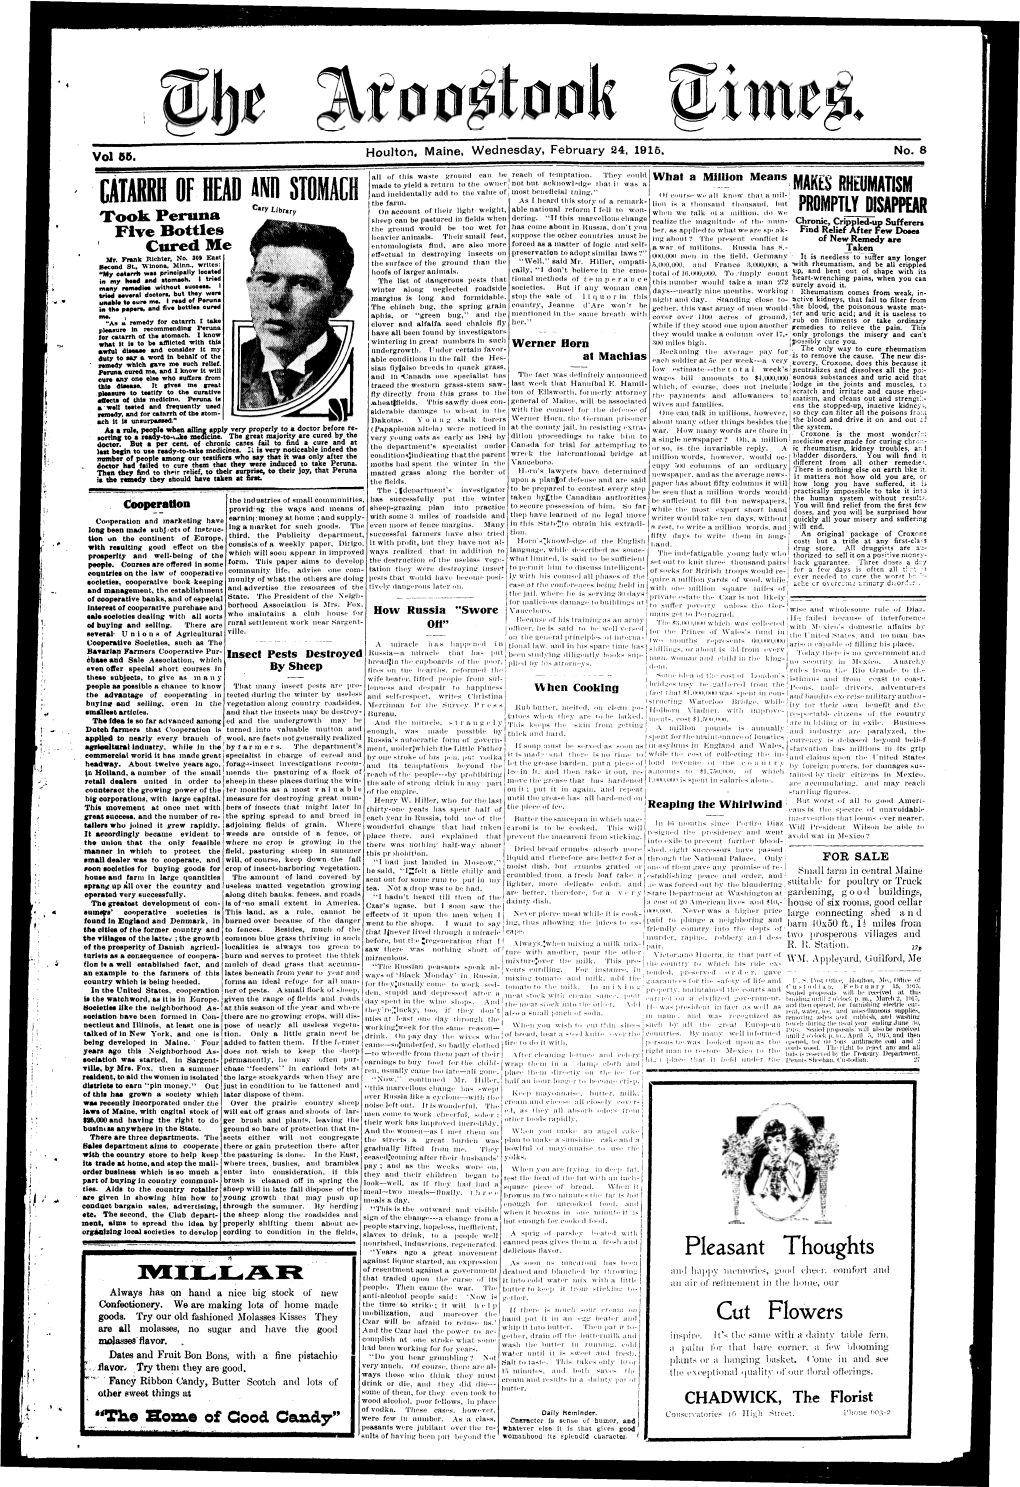 The Aroostook Times, February 24, 1915